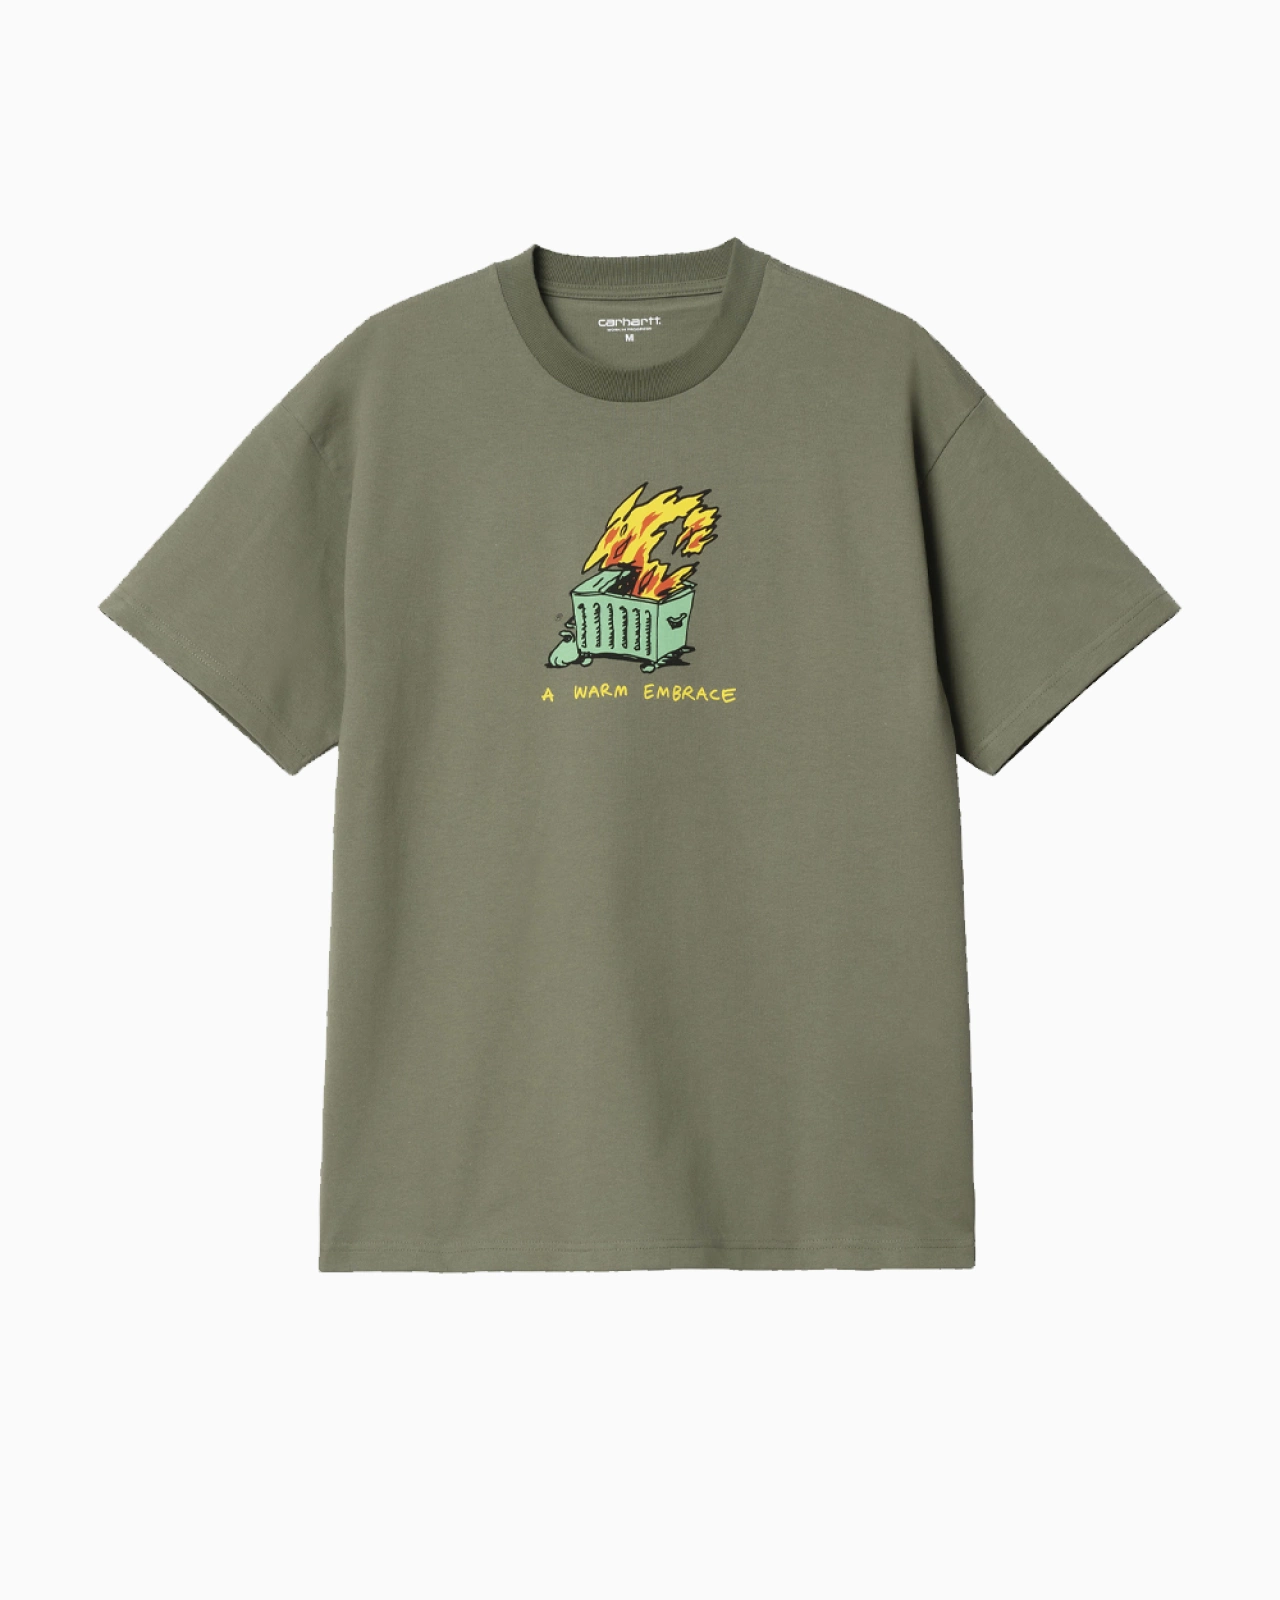 Carhartt Wip: Футболка Carhartt WIP S/S Warm Embrace T-Shirt